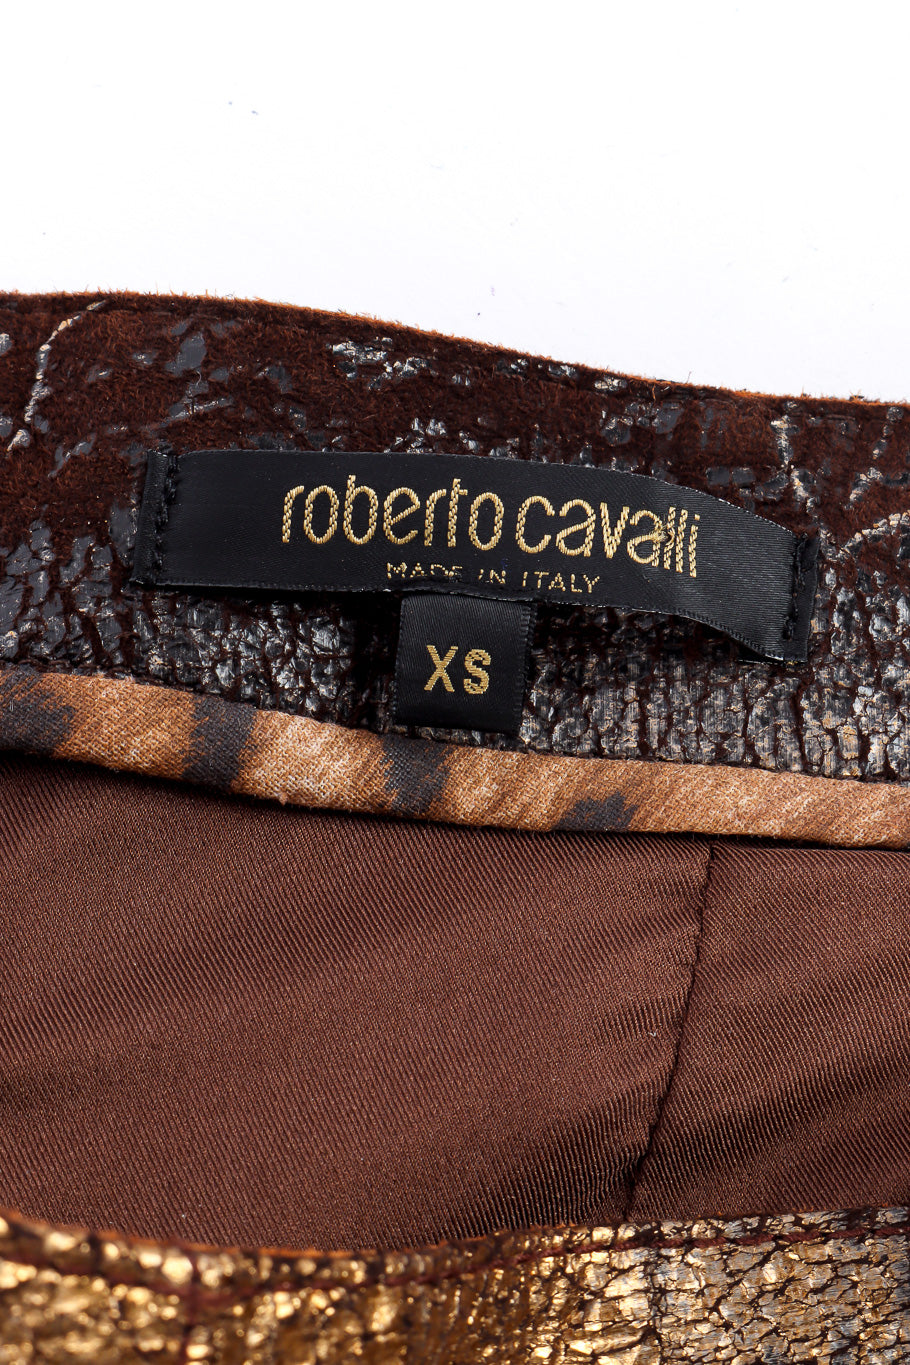 Leather pants by Roberto Cavalli flat lay label @recessla